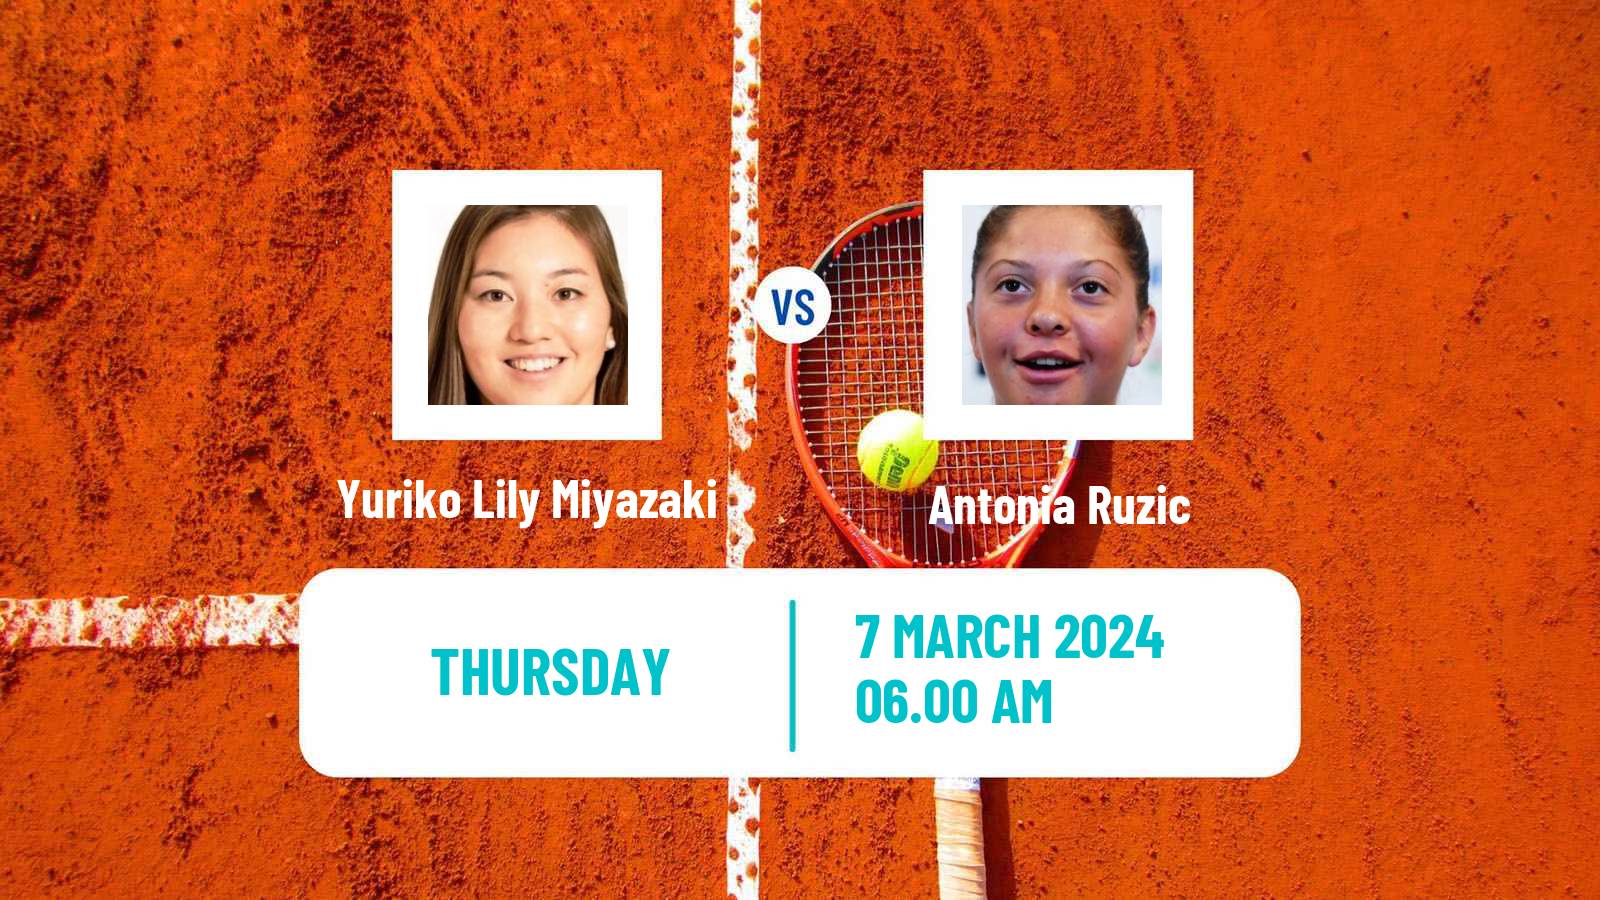 Tennis ITF W75 Trnava Women Yuriko Lily Miyazaki - Antonia Ruzic